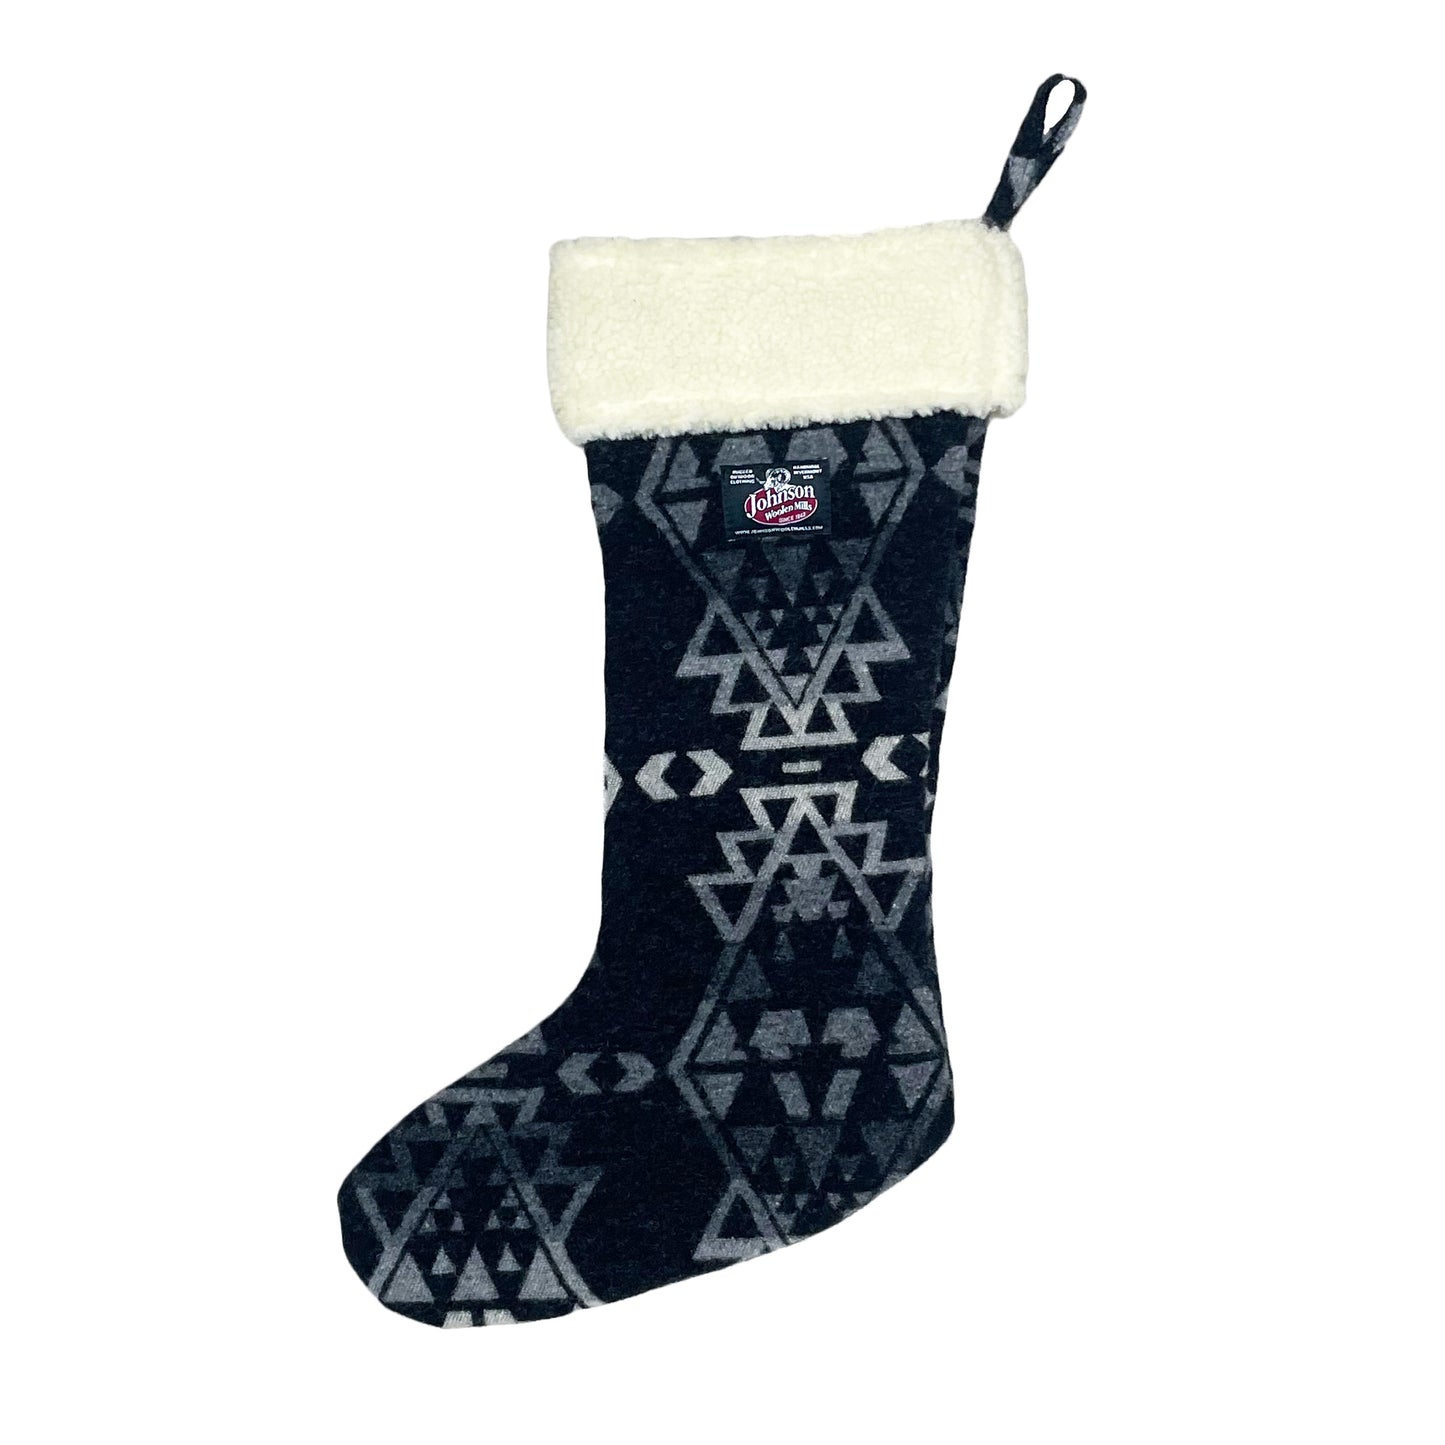 Johnson Woolen Mills gray Indian print wool Christmas stocking